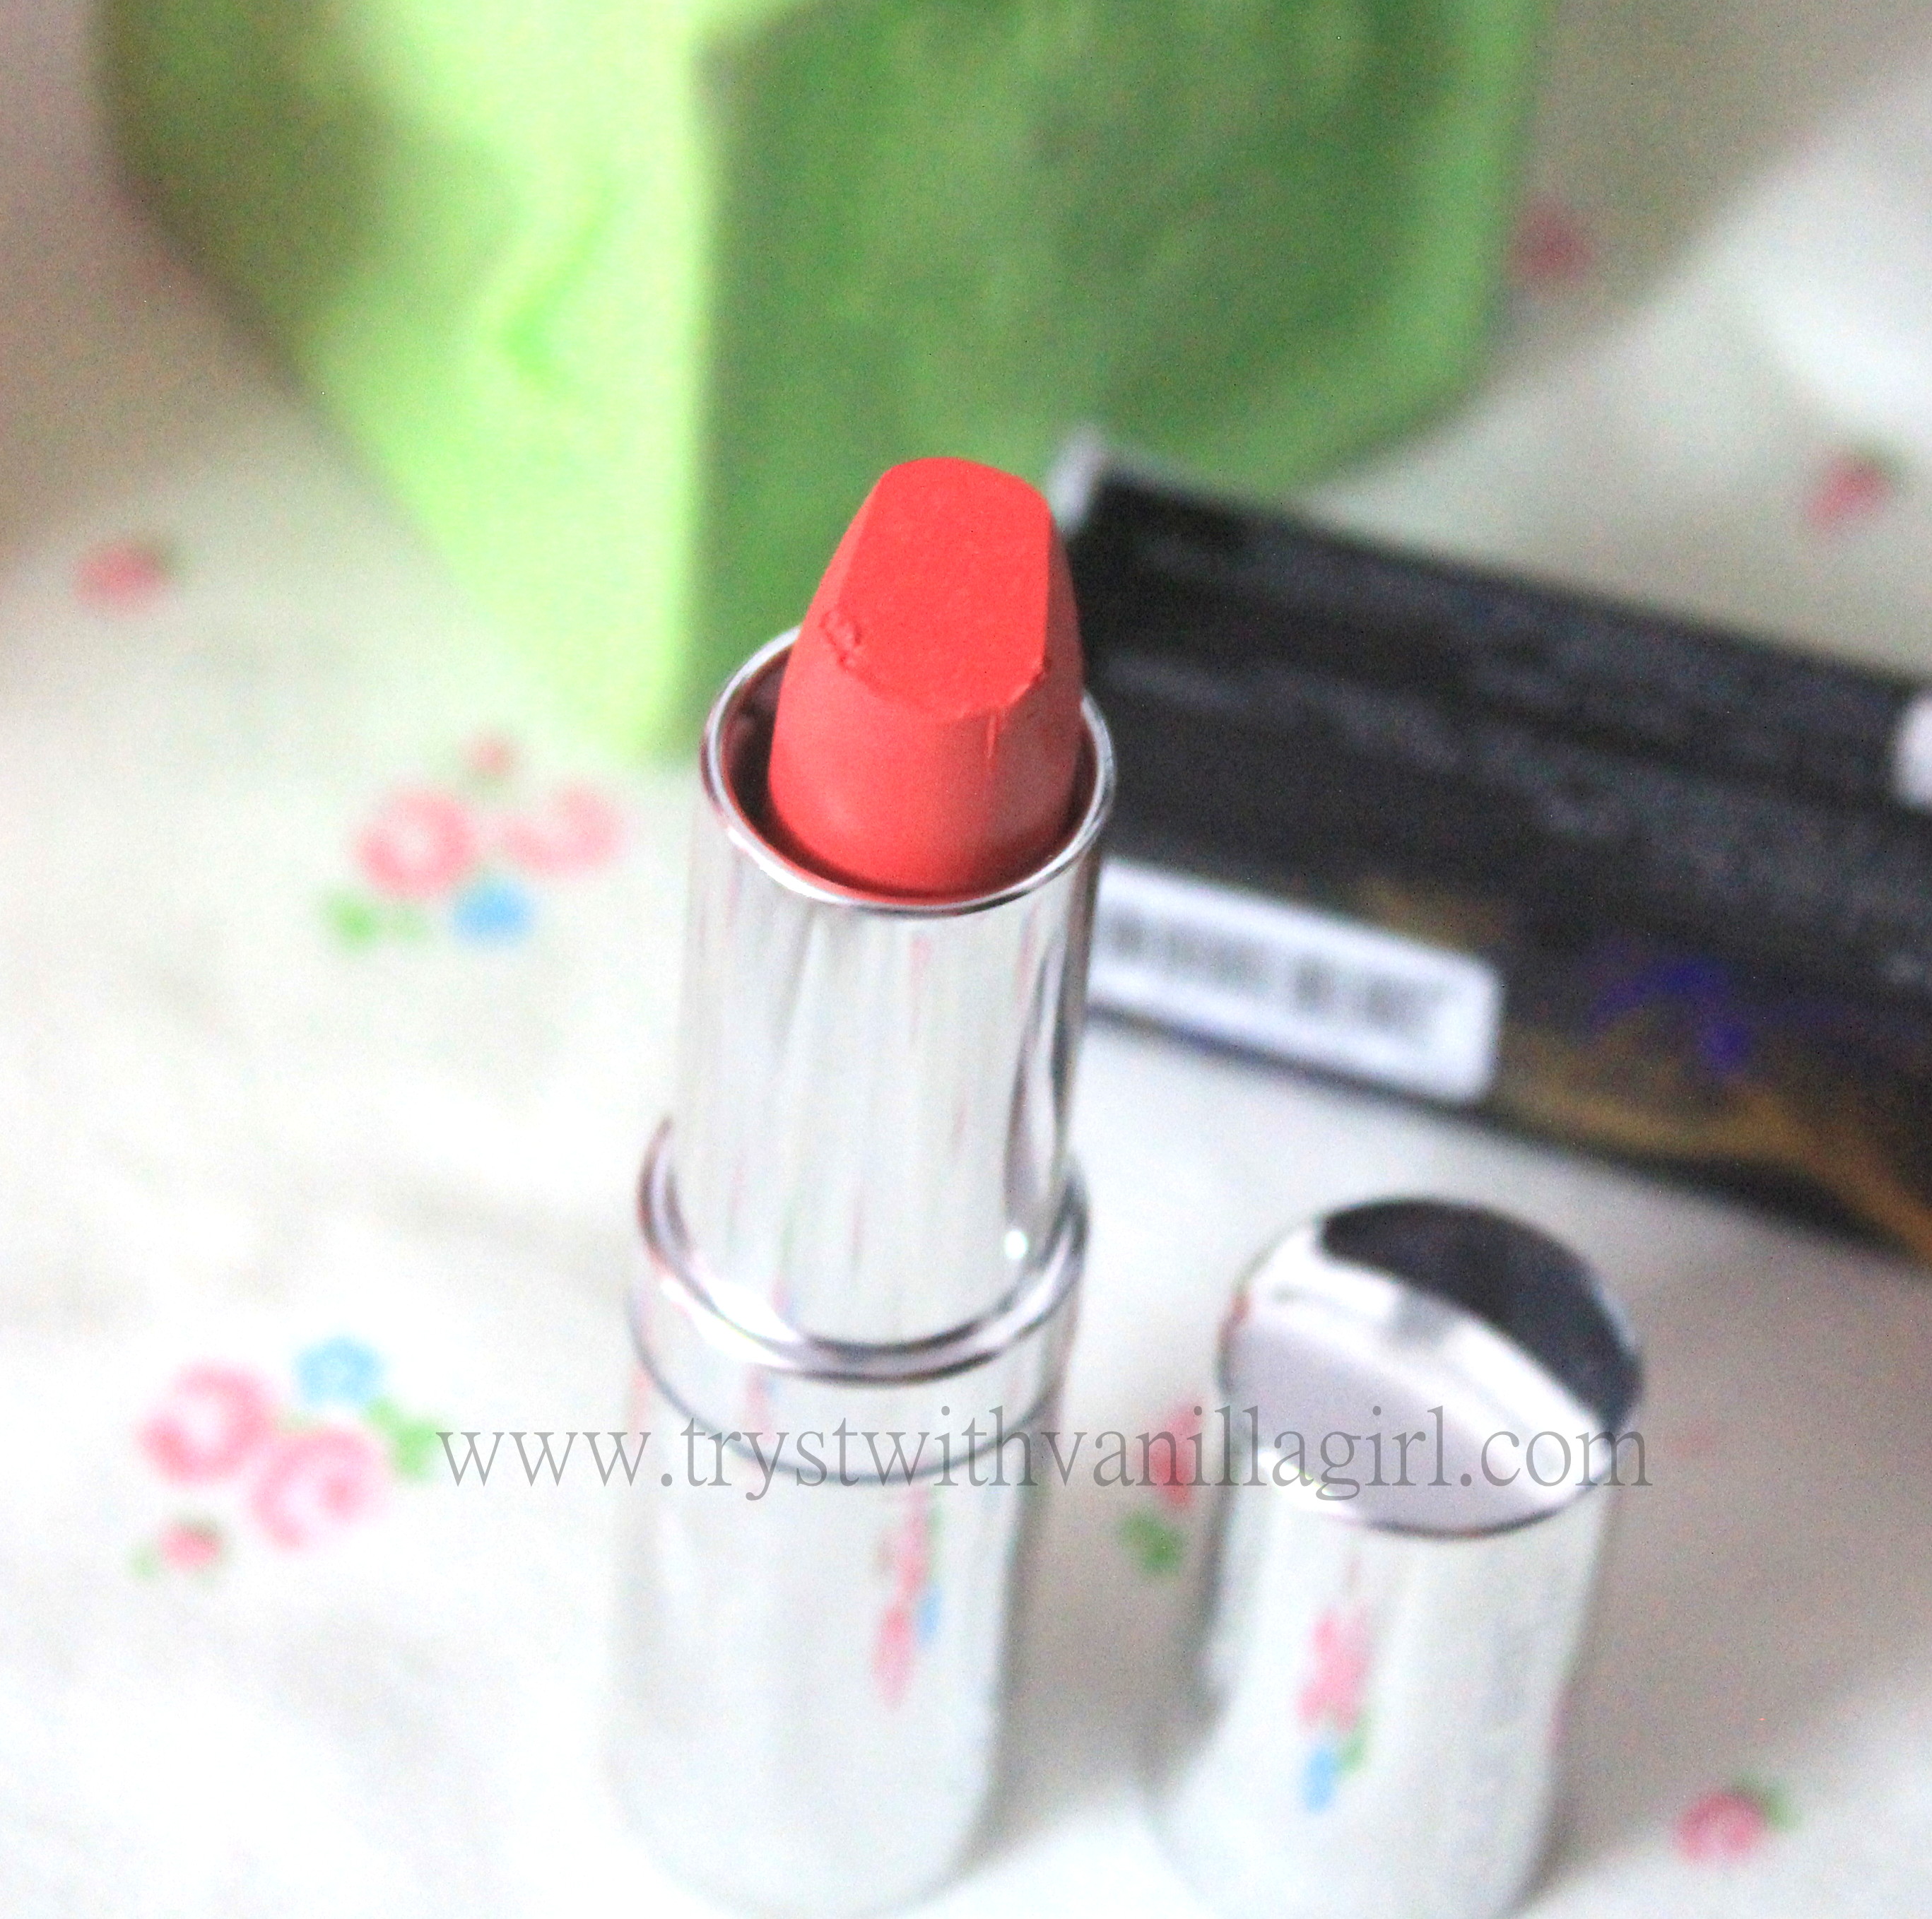 Colorbar Darkened Summer Matte Touch Lipstick Peach Life Review,Swatch,Photos